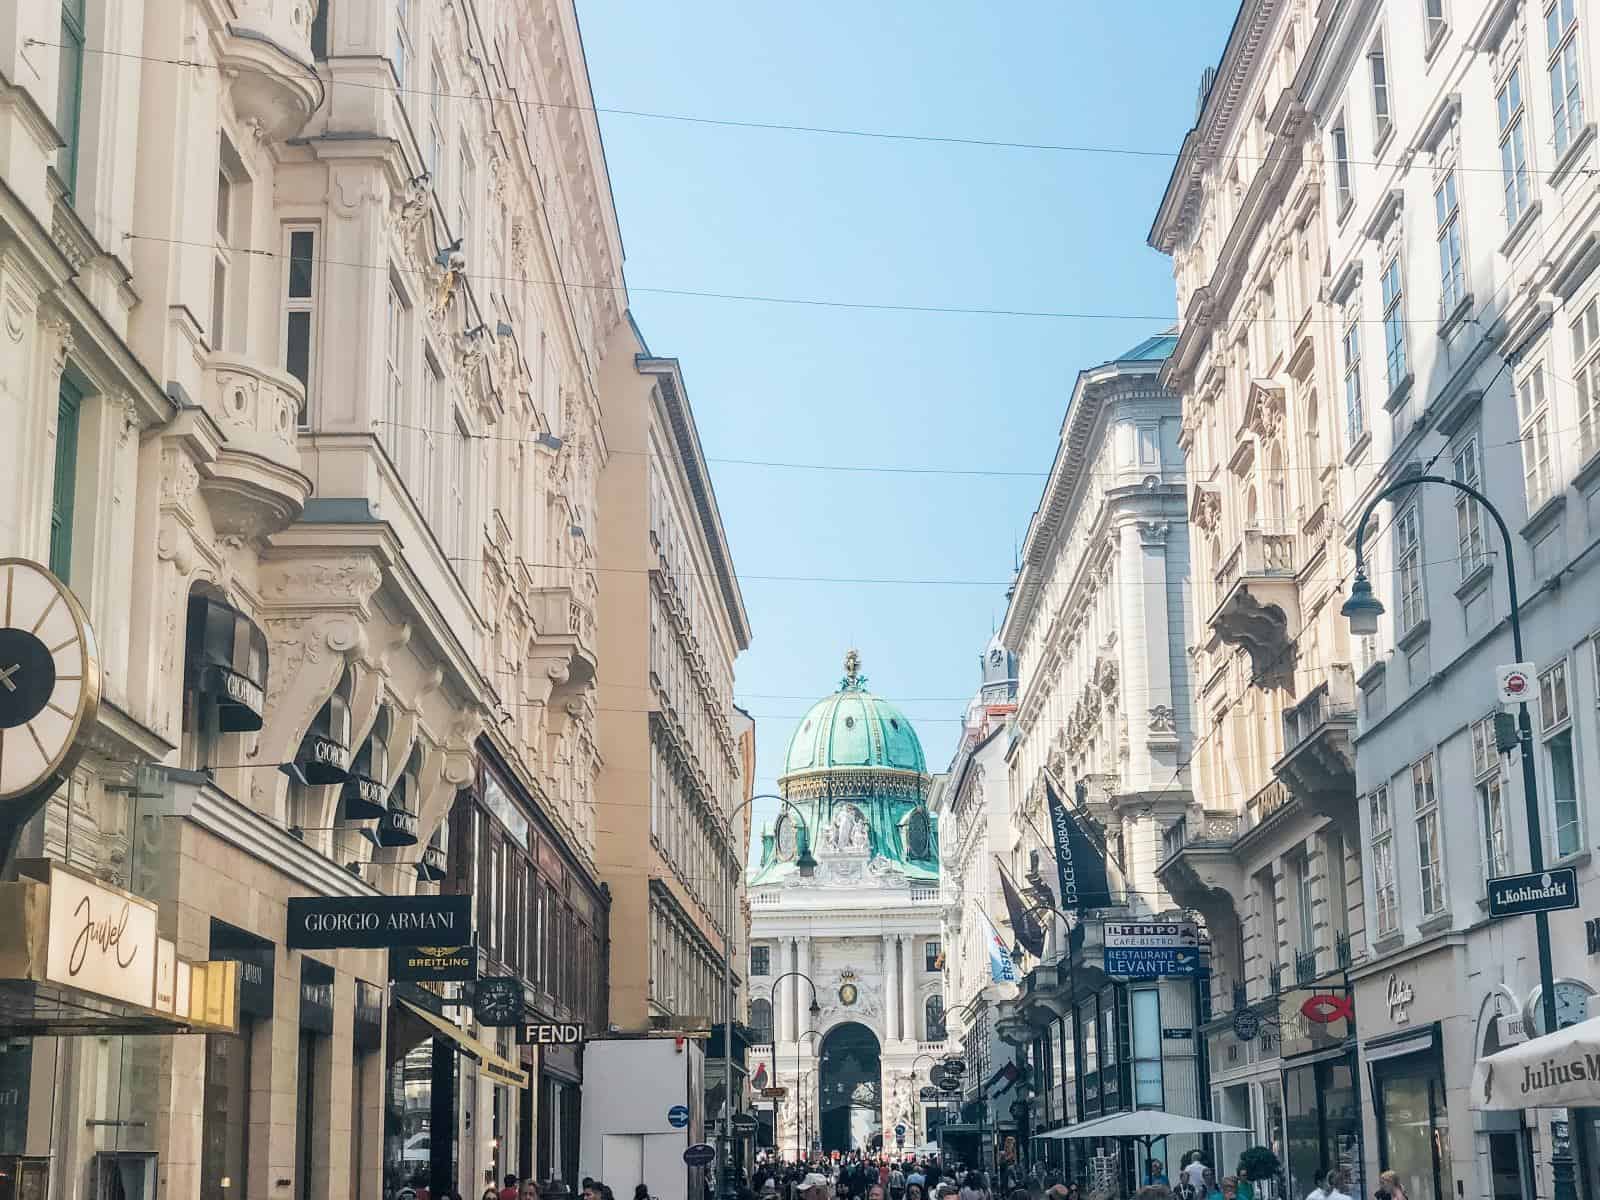 Wandering the streets of Bratislava